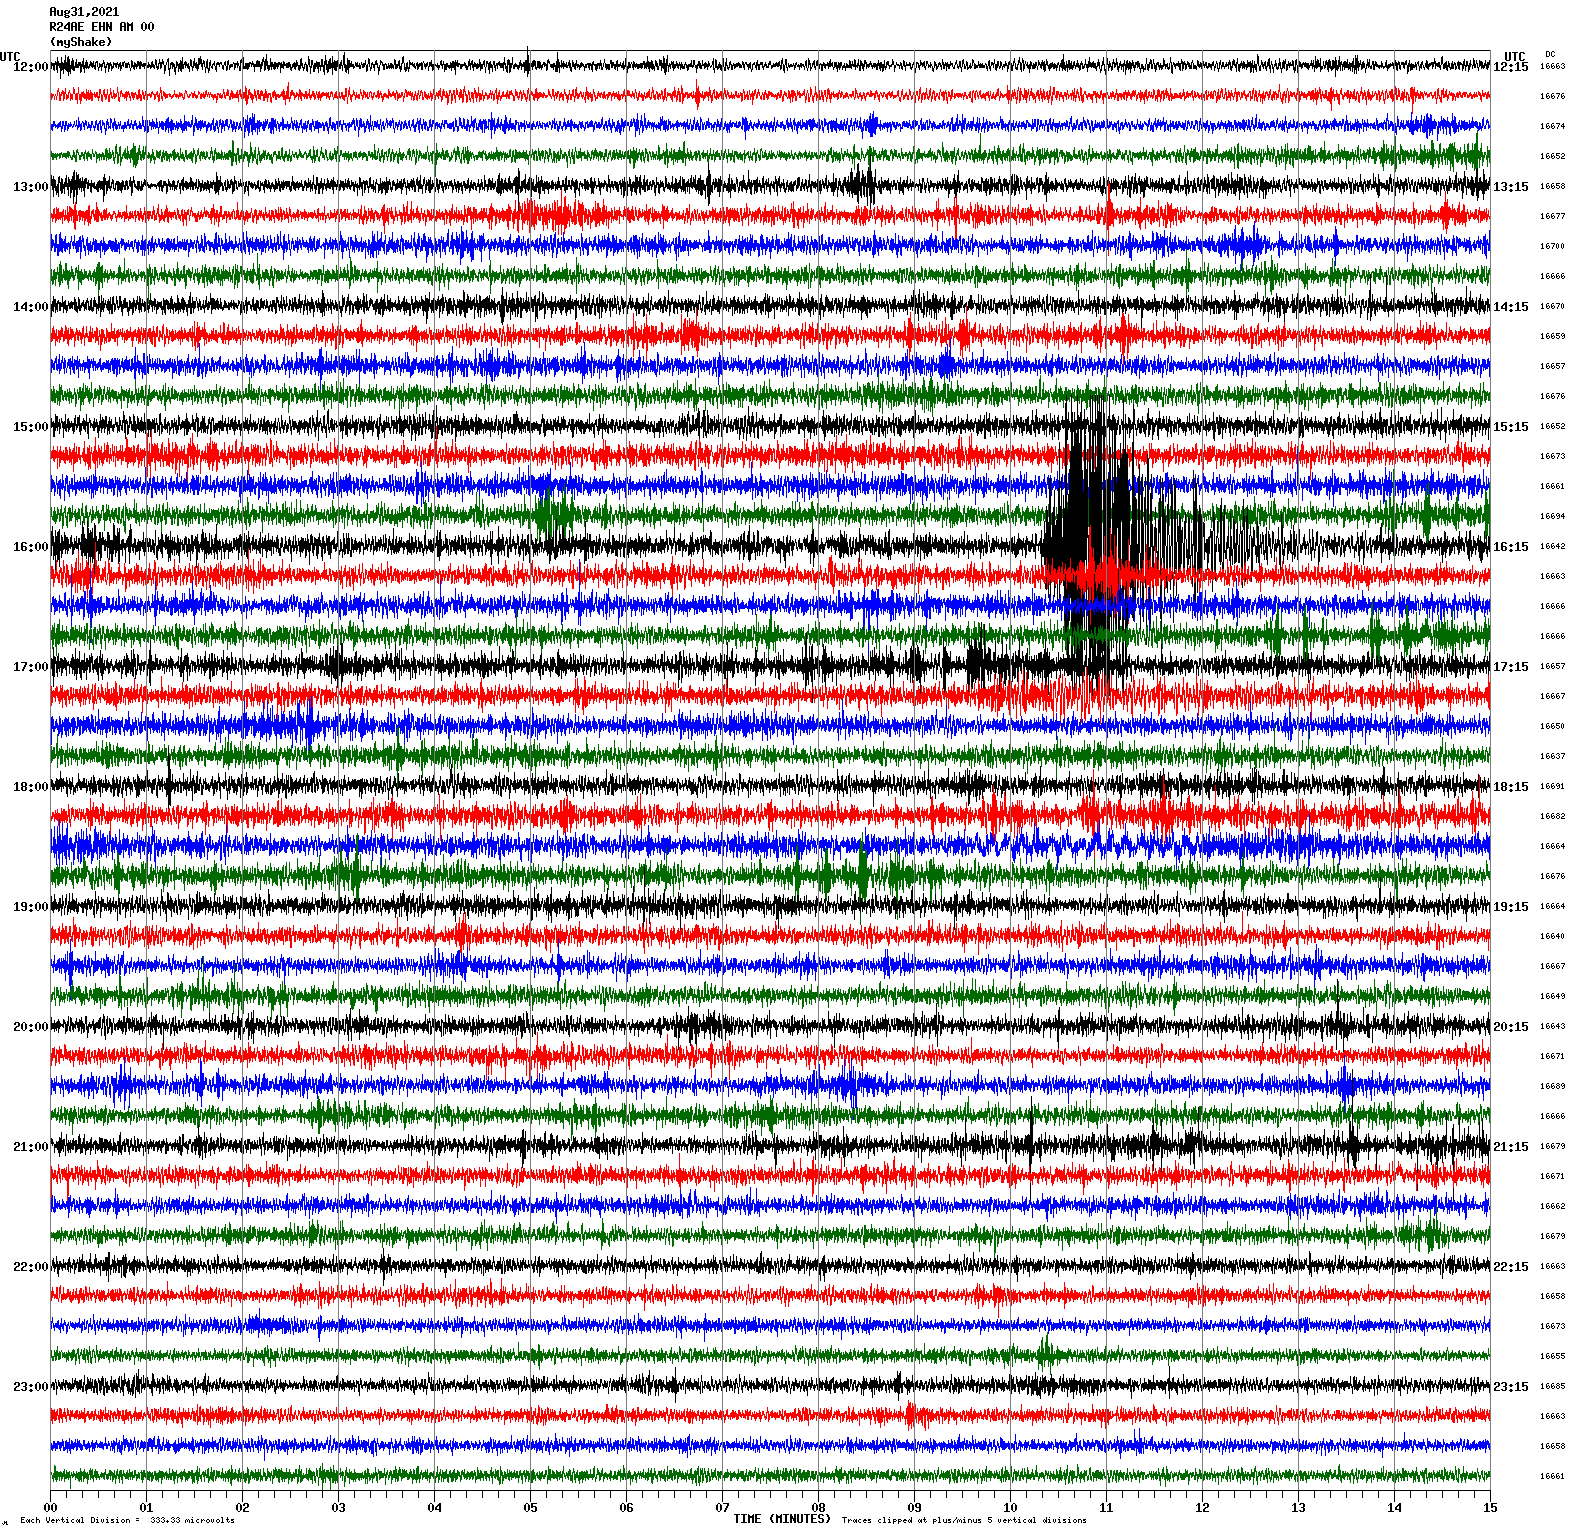 /seismic-data/R24AE/R24AE_EHN_AM_00.2021083112.gif